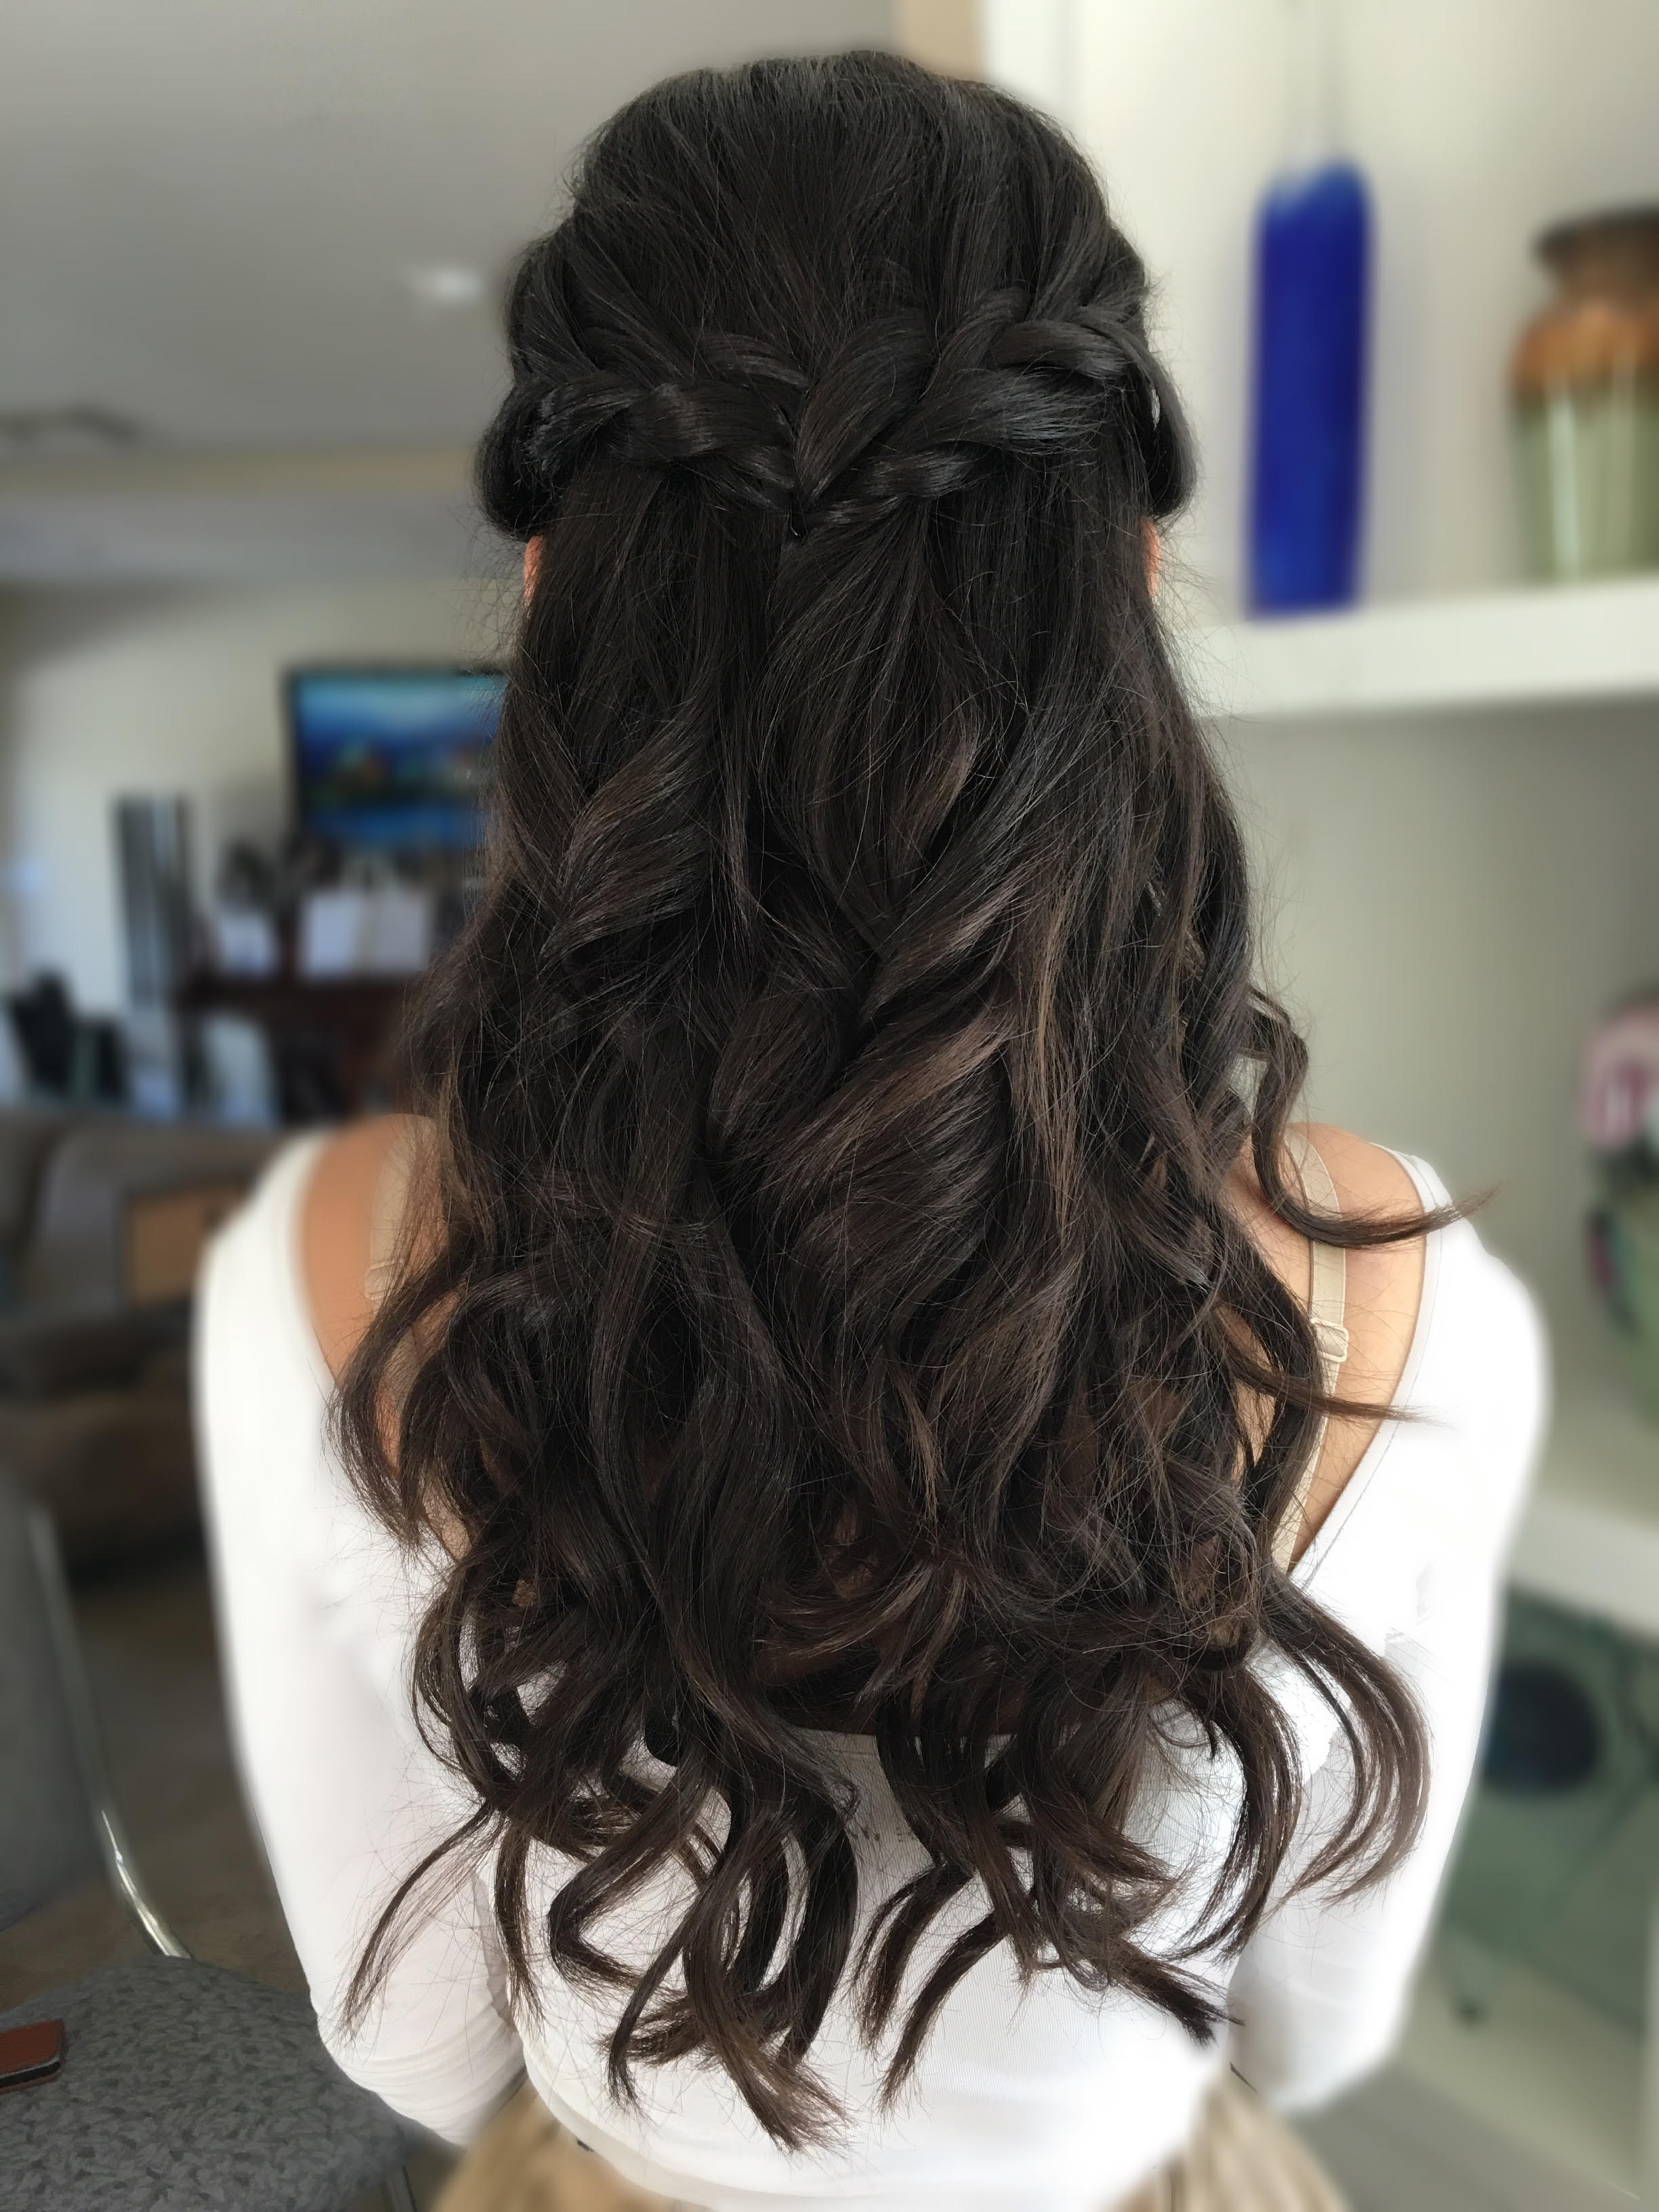 Susie chhuor asian hair half up half down wedding hair loose curls | Hair  styles, Loose curls hairstyles, Loose hairstyles